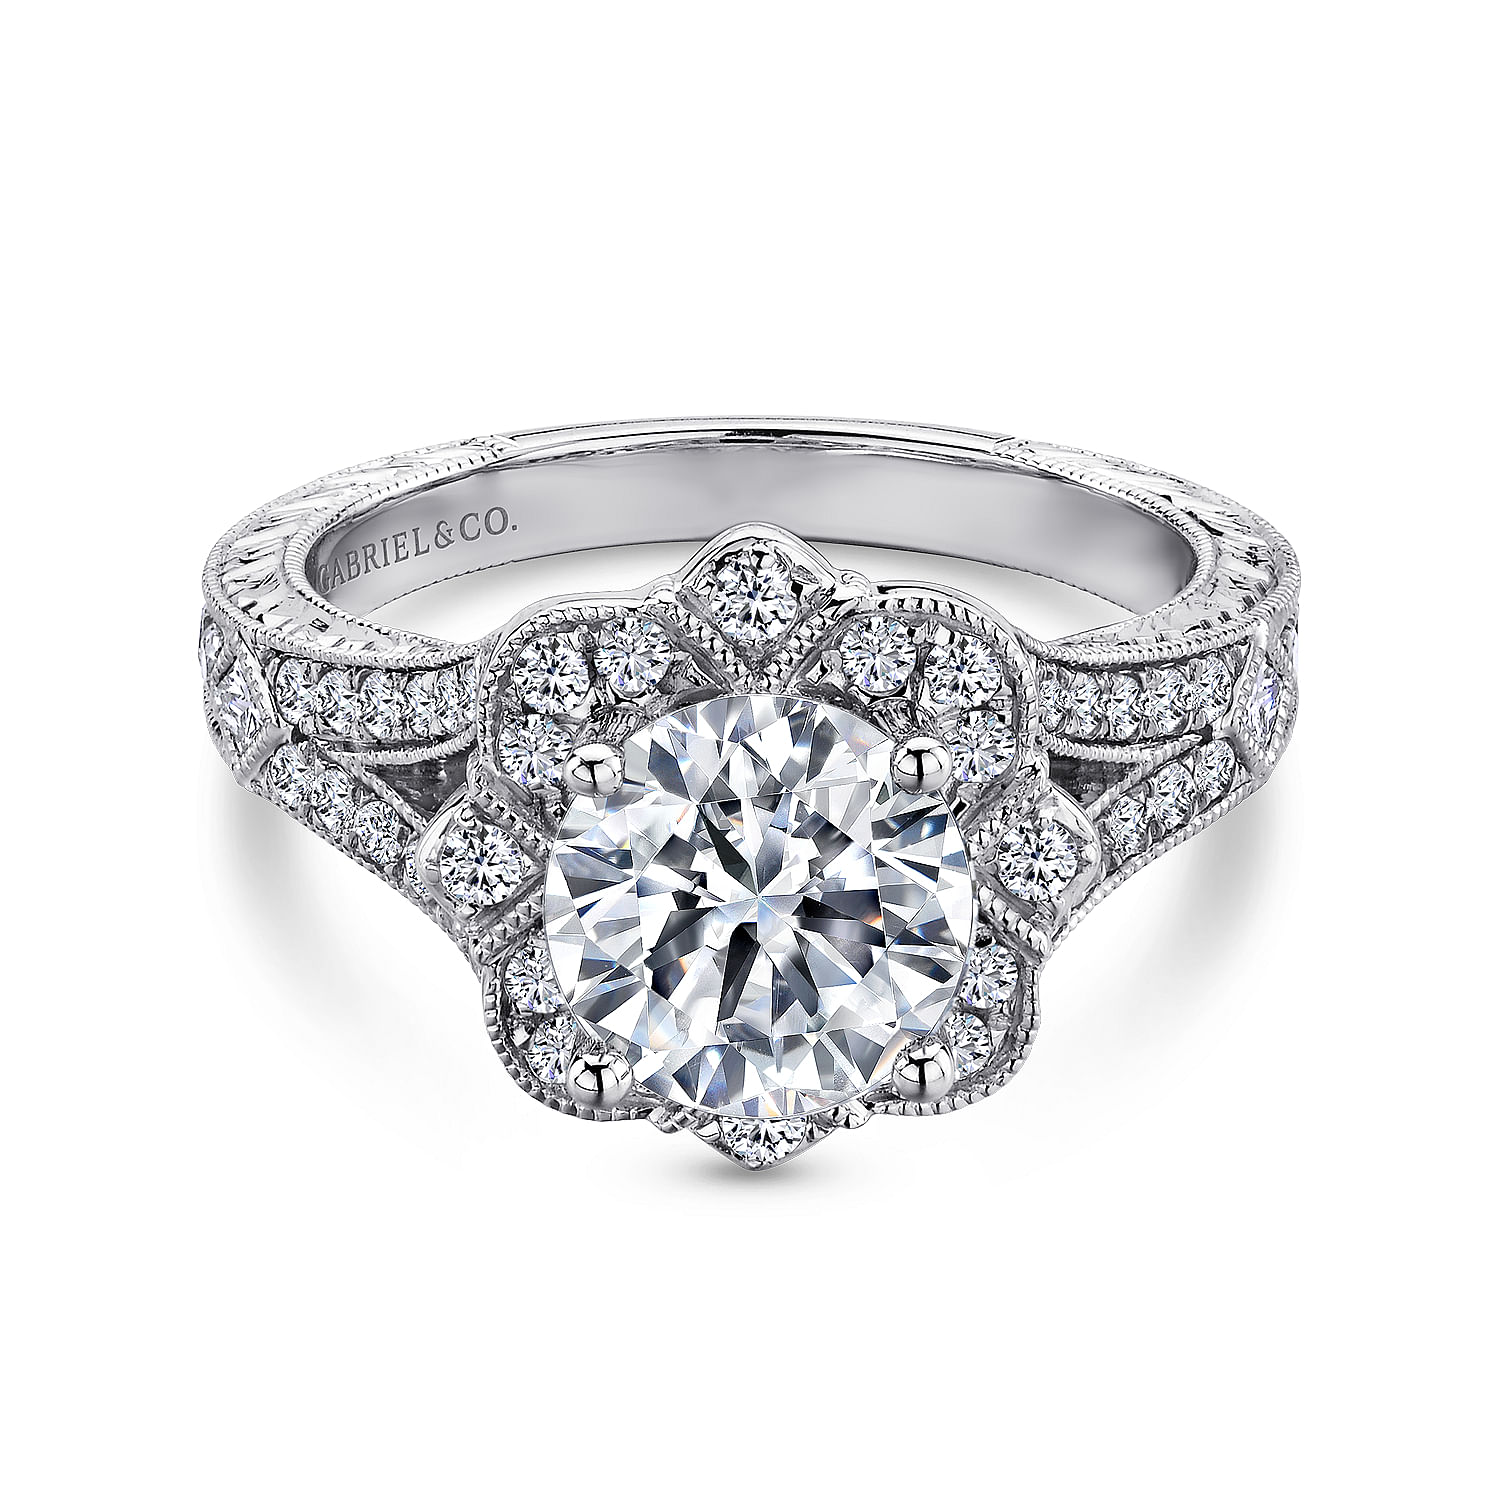 Nolita - Unique 14K White Gold Vintage Inspired Halo Diamond Engagement Ring